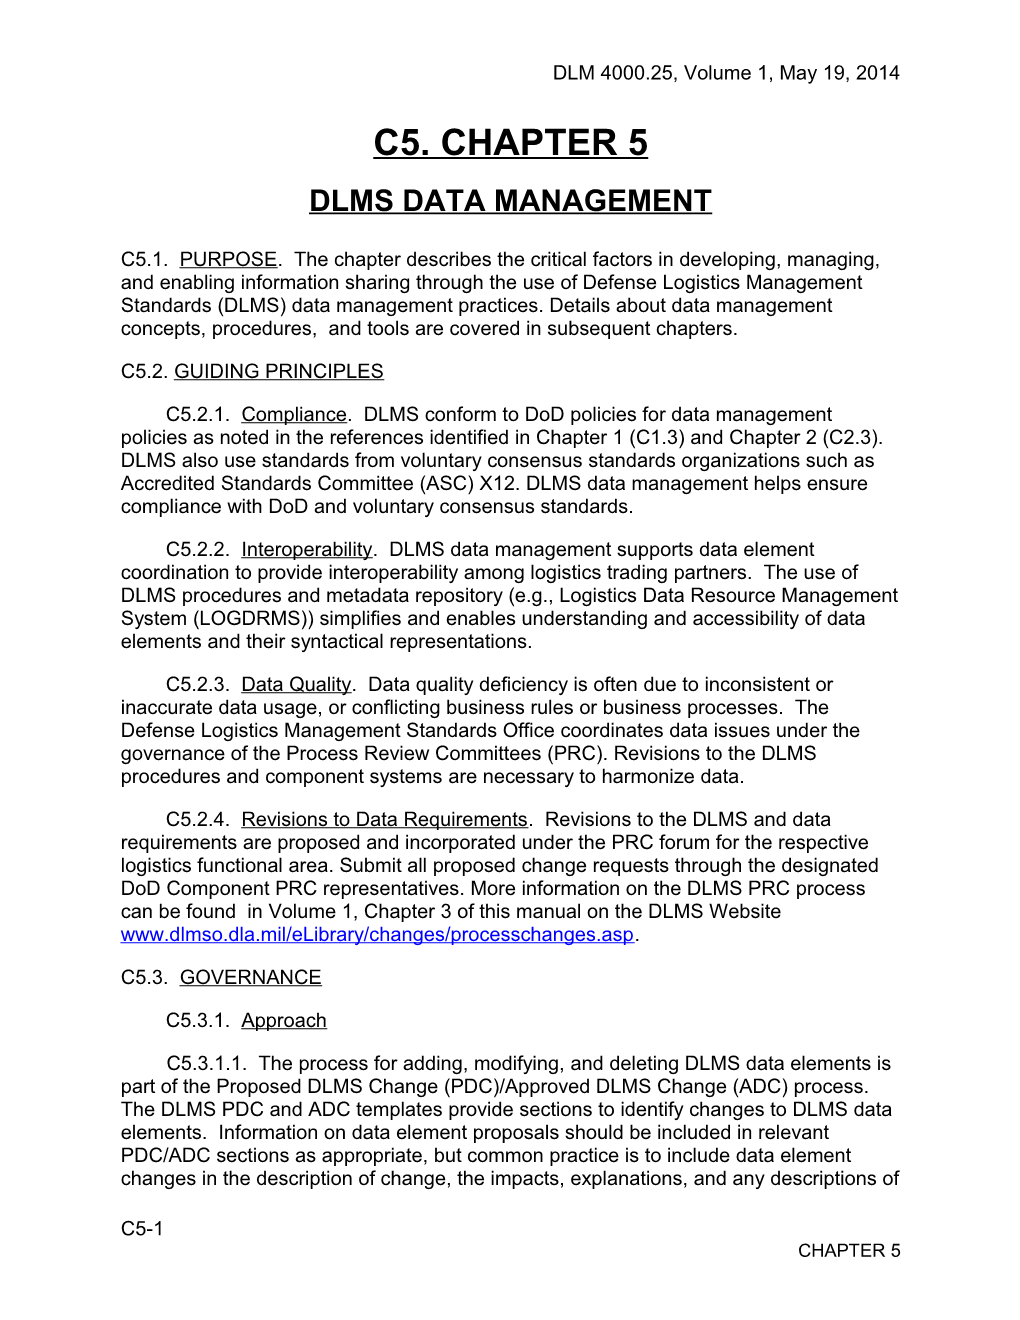 Chapter 5 - DLMS Data Management